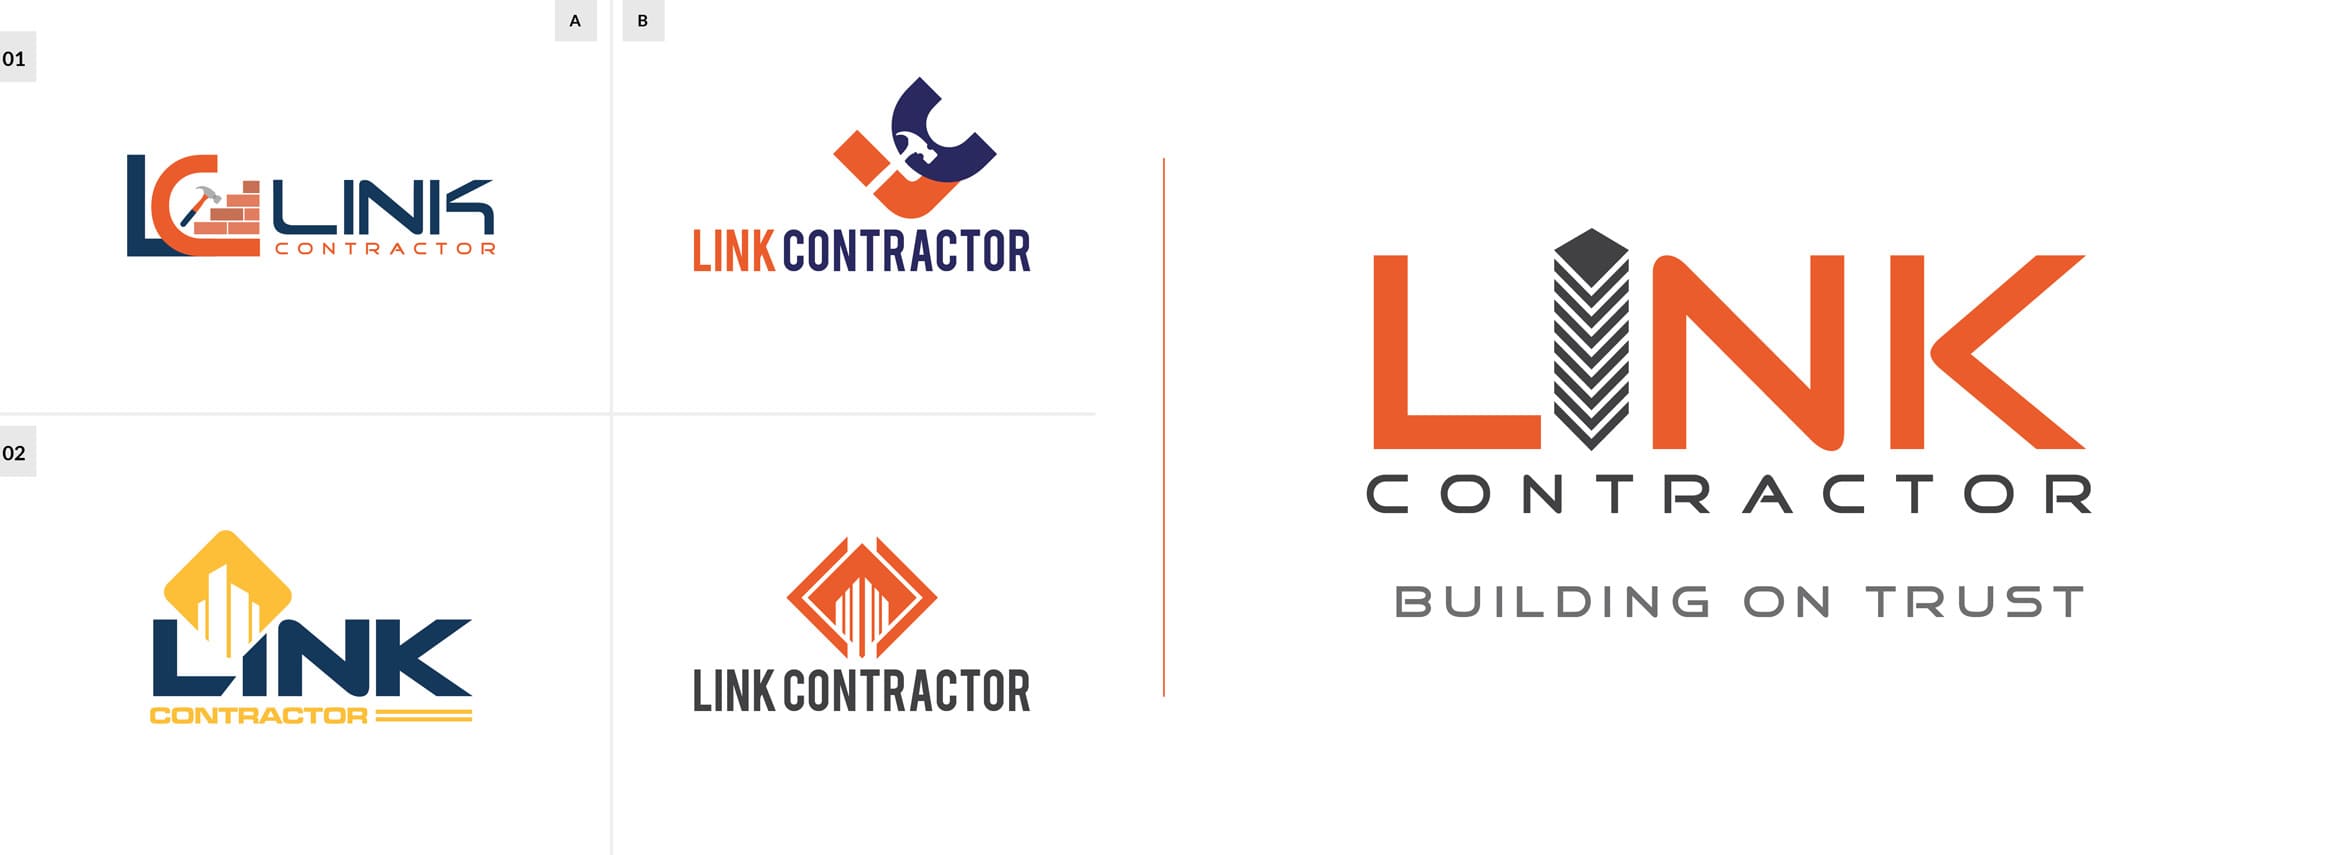 Link Contractor Logo Design Options